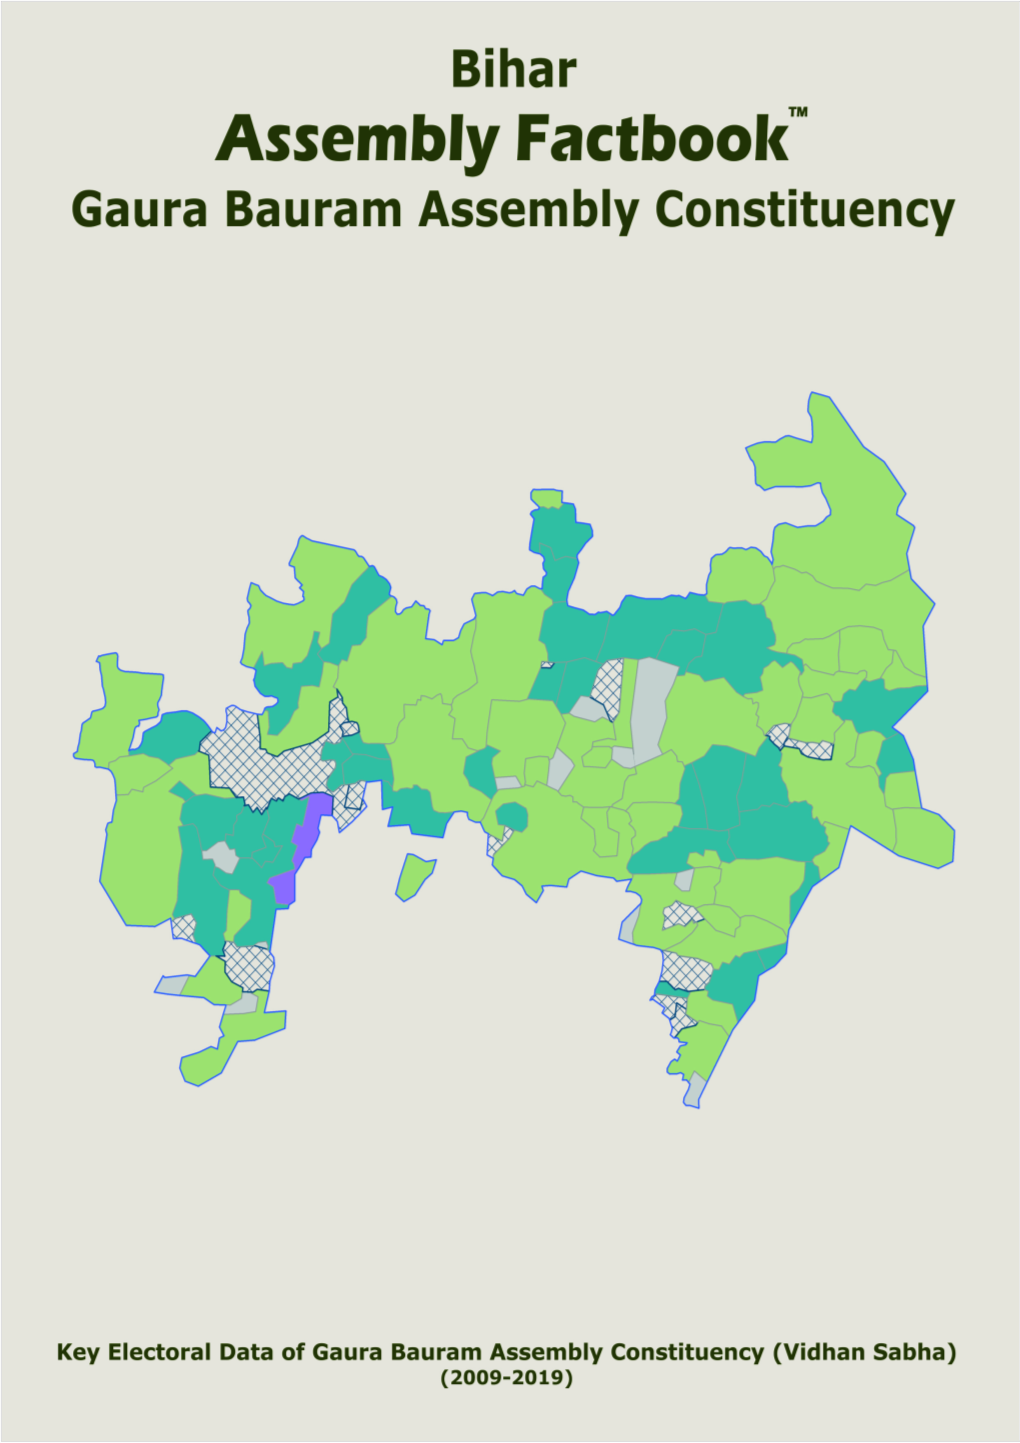 Gaura Bauram Assembly Bihar Factbook